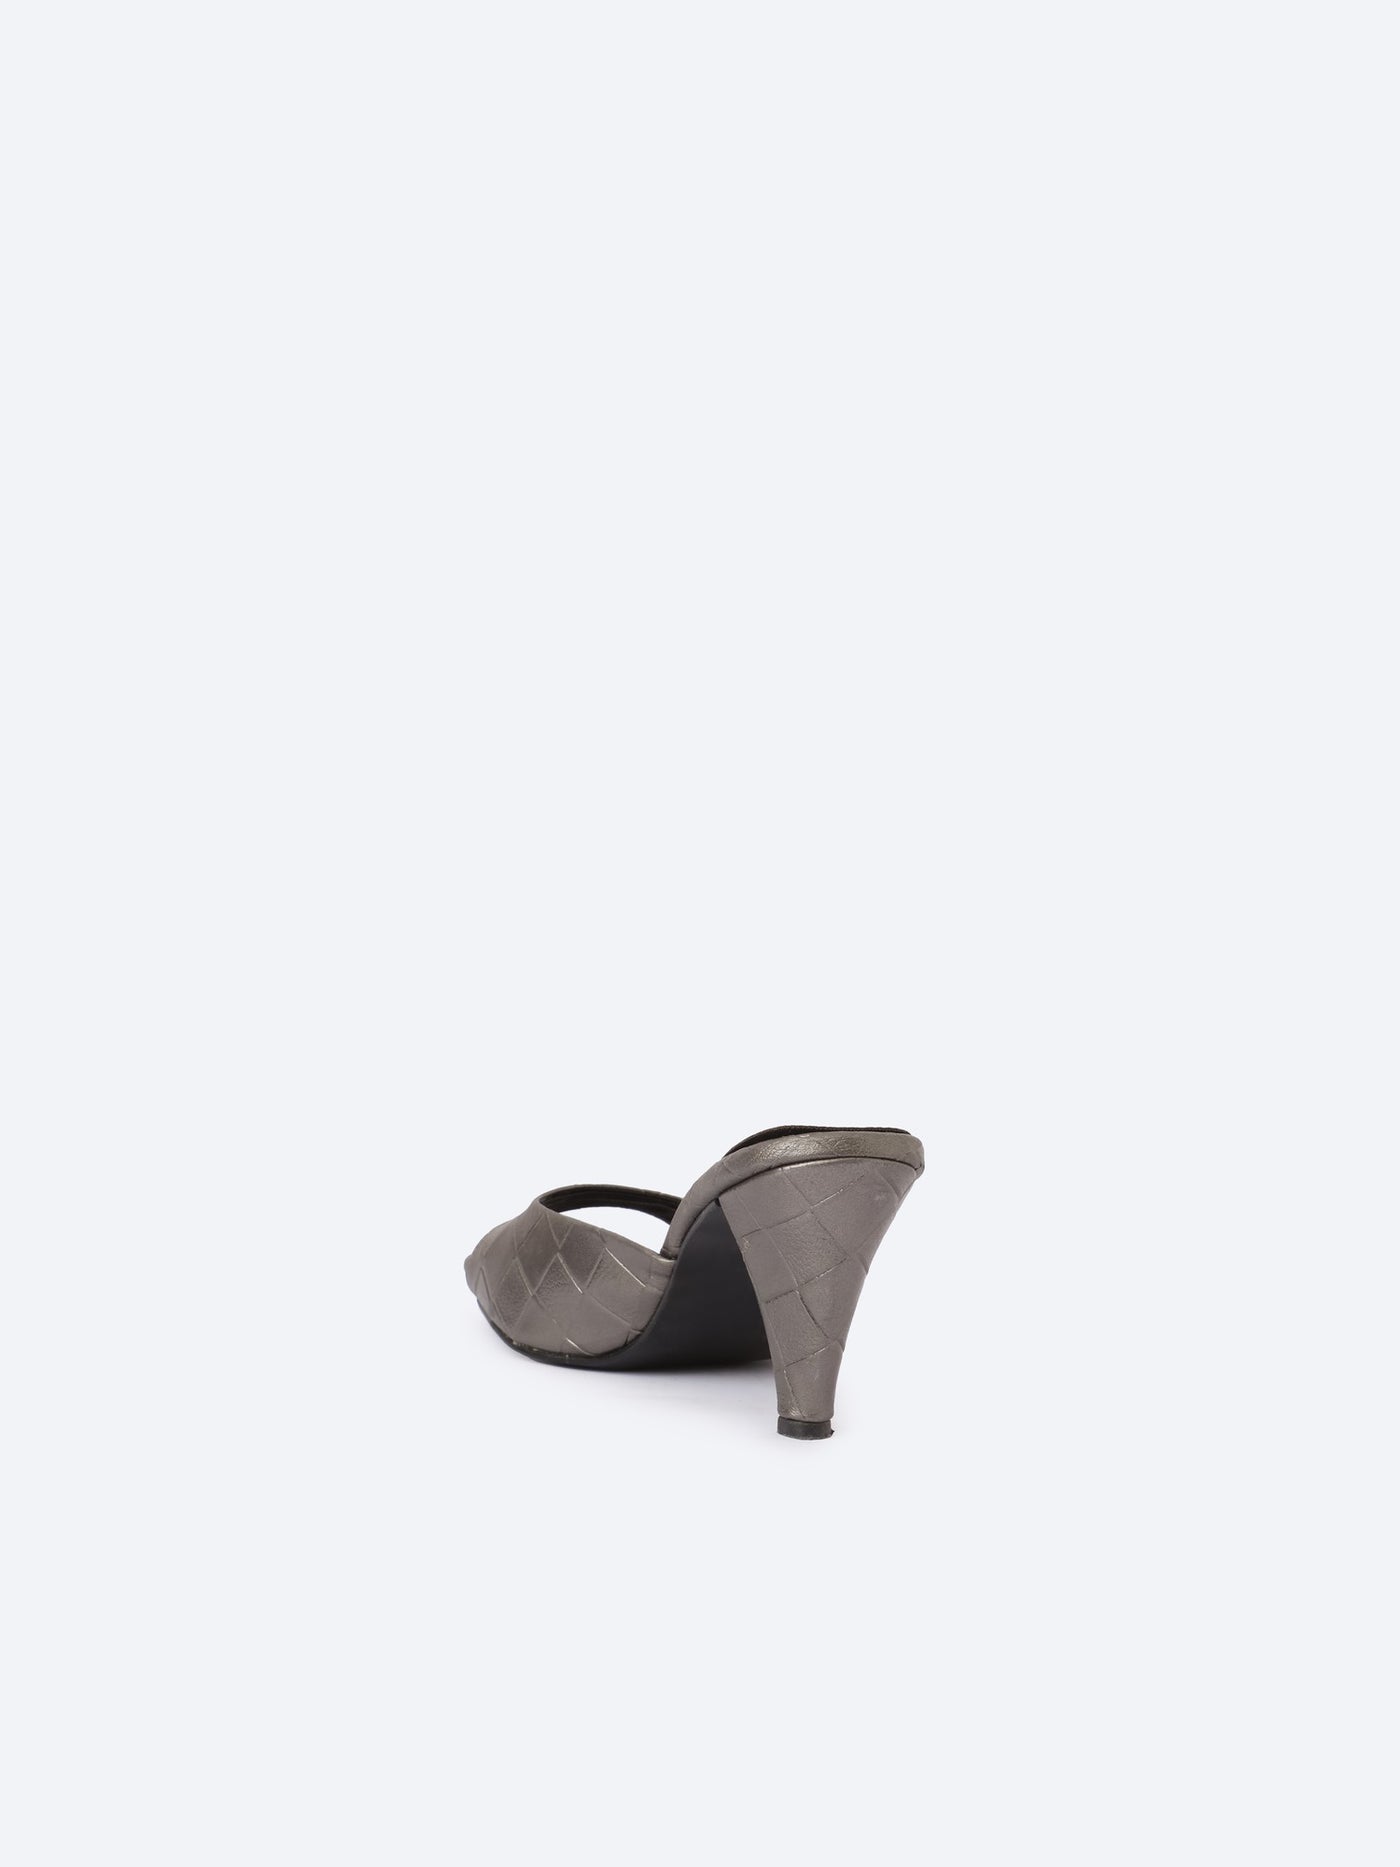 Sandals - Squared Toe